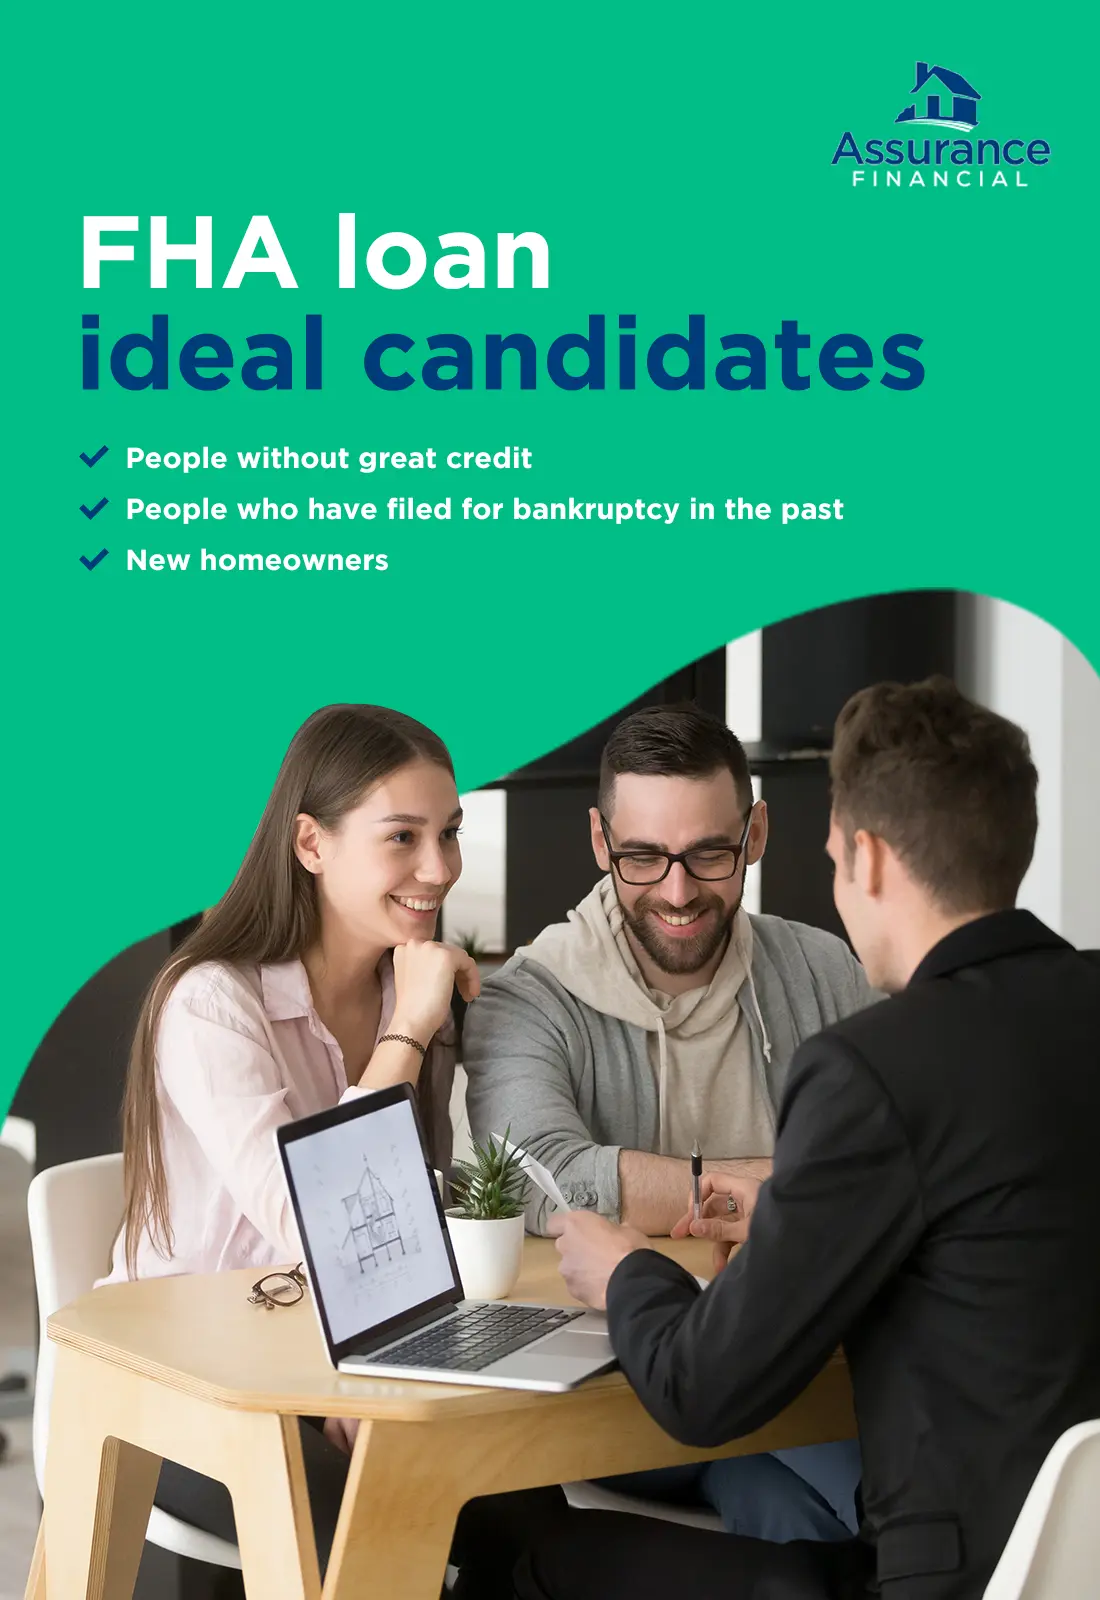 FHA loan ideal candidates